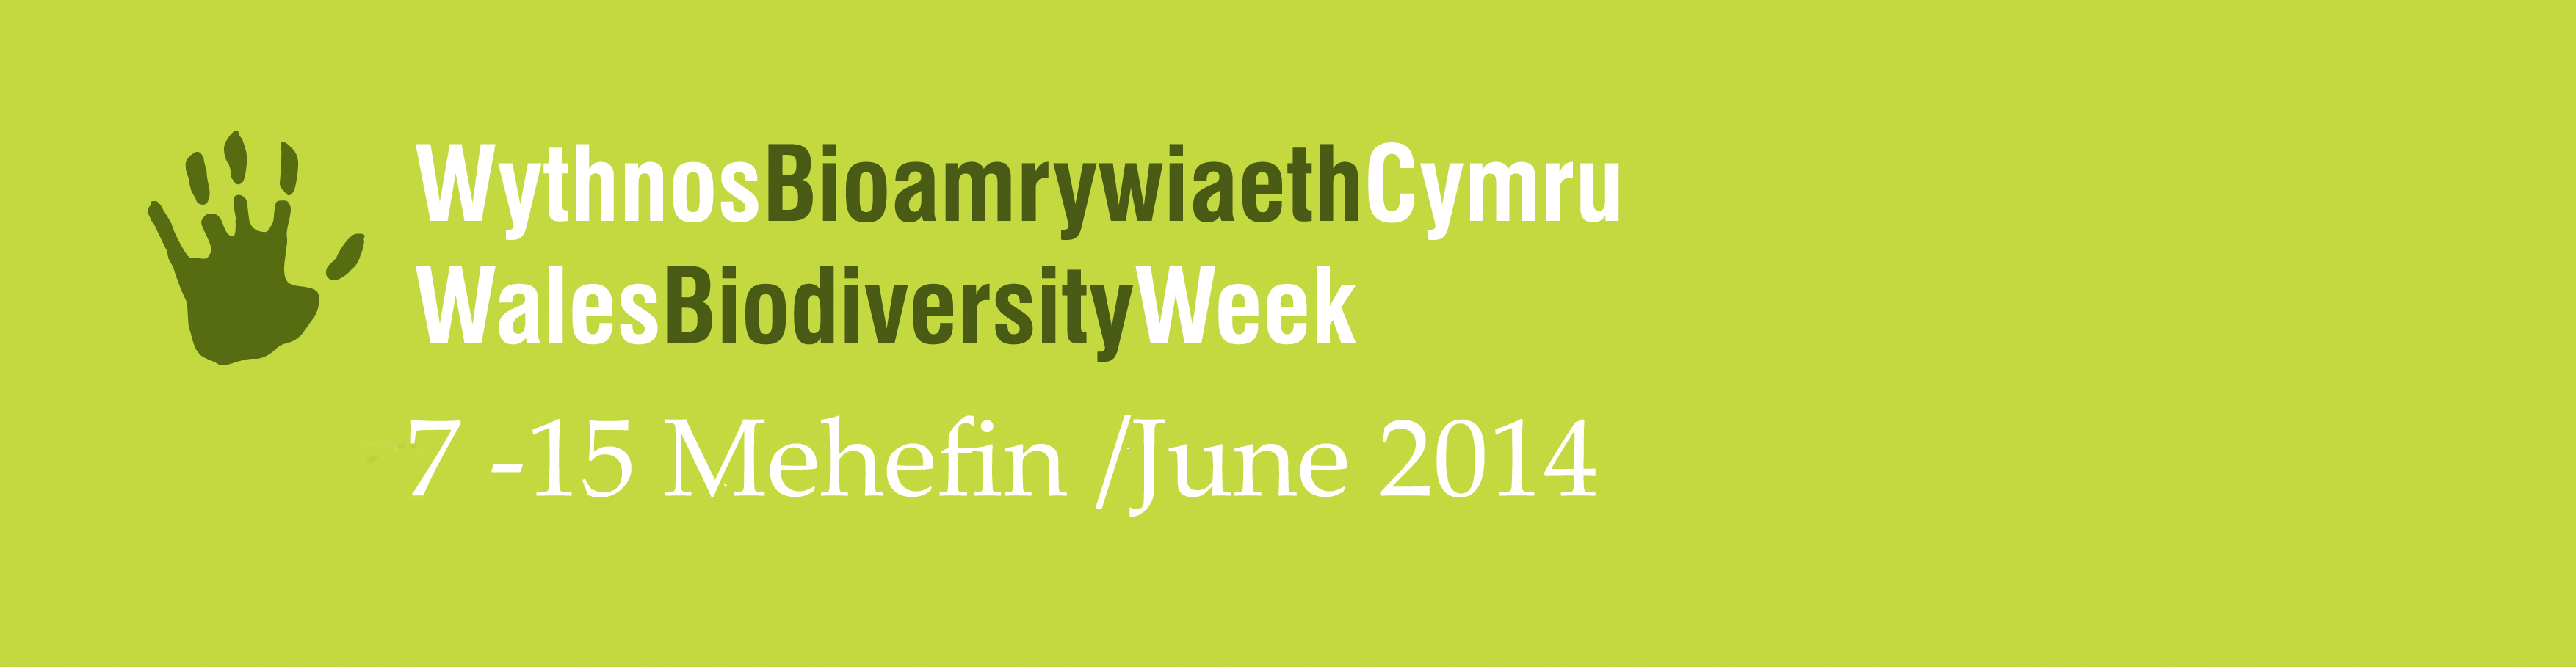 Wales Biodiversity Week